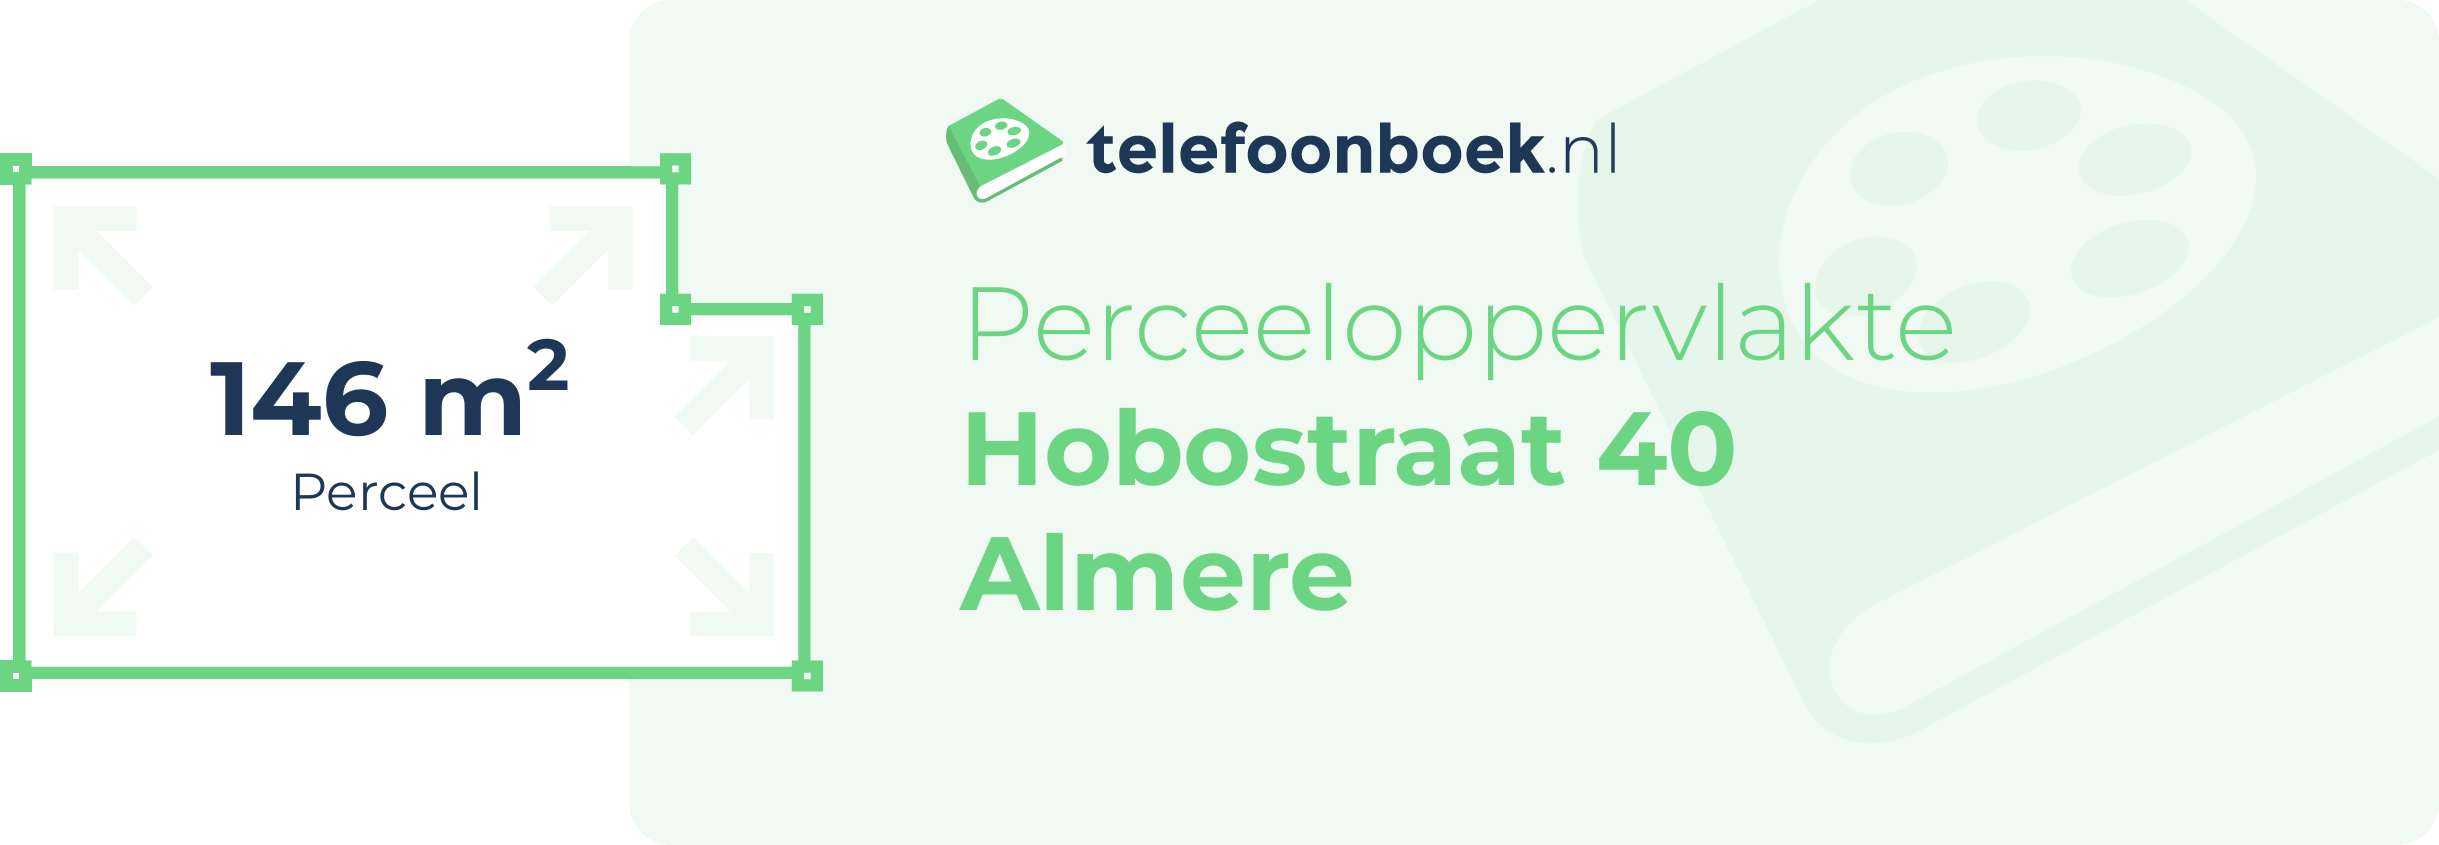 Perceeloppervlakte Hobostraat 40 Almere